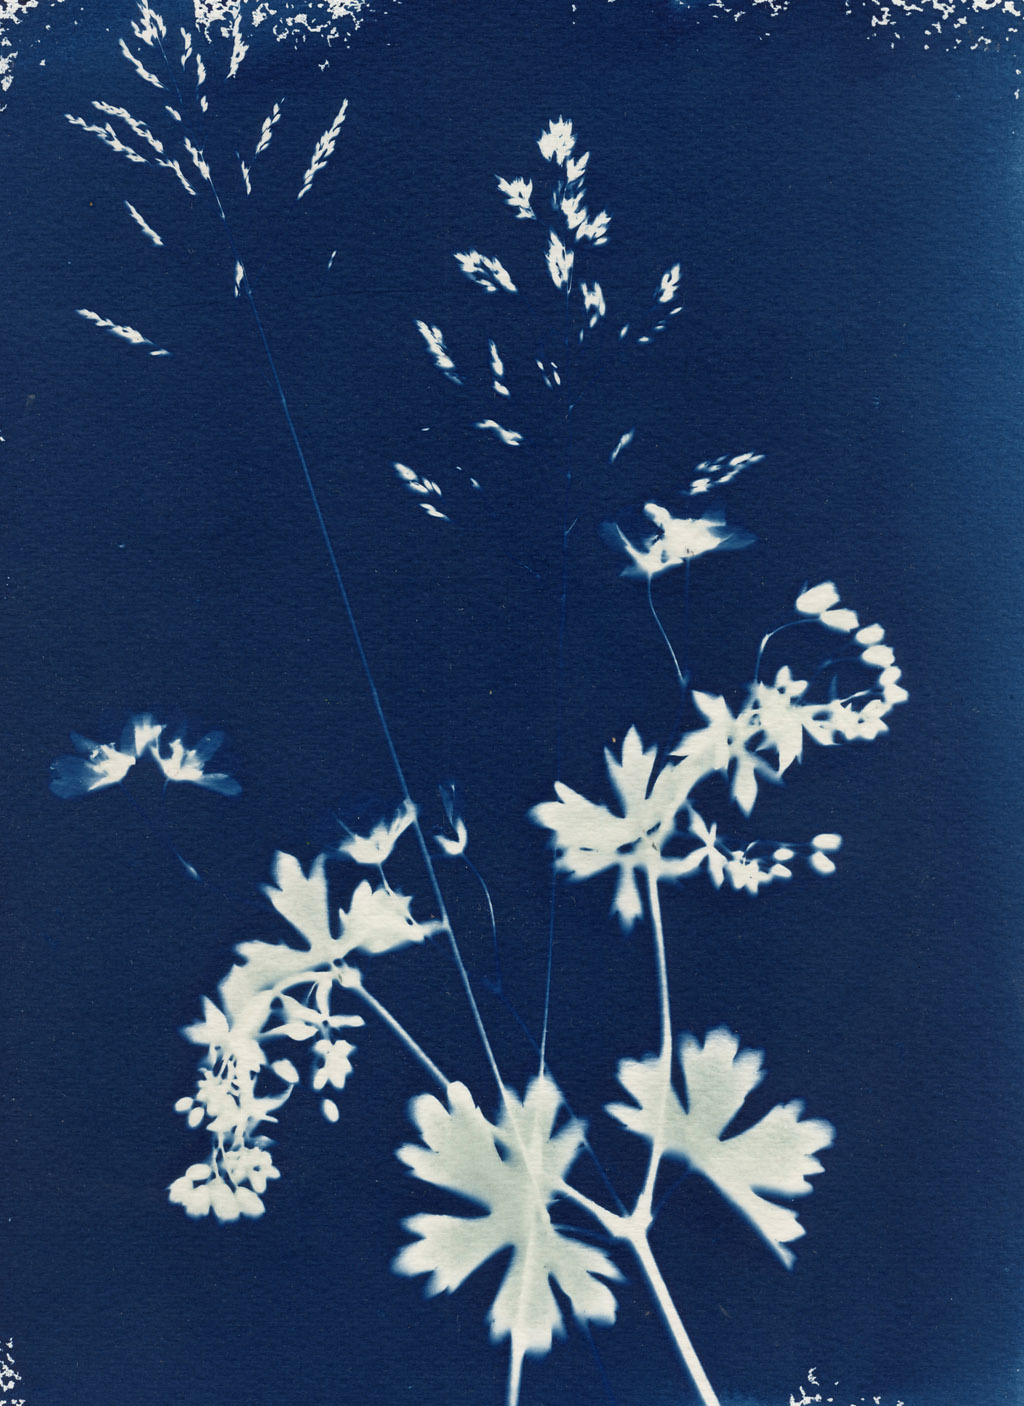 cyanotype-fleurs-graminees-1024-D.Crolle-Terzaghi